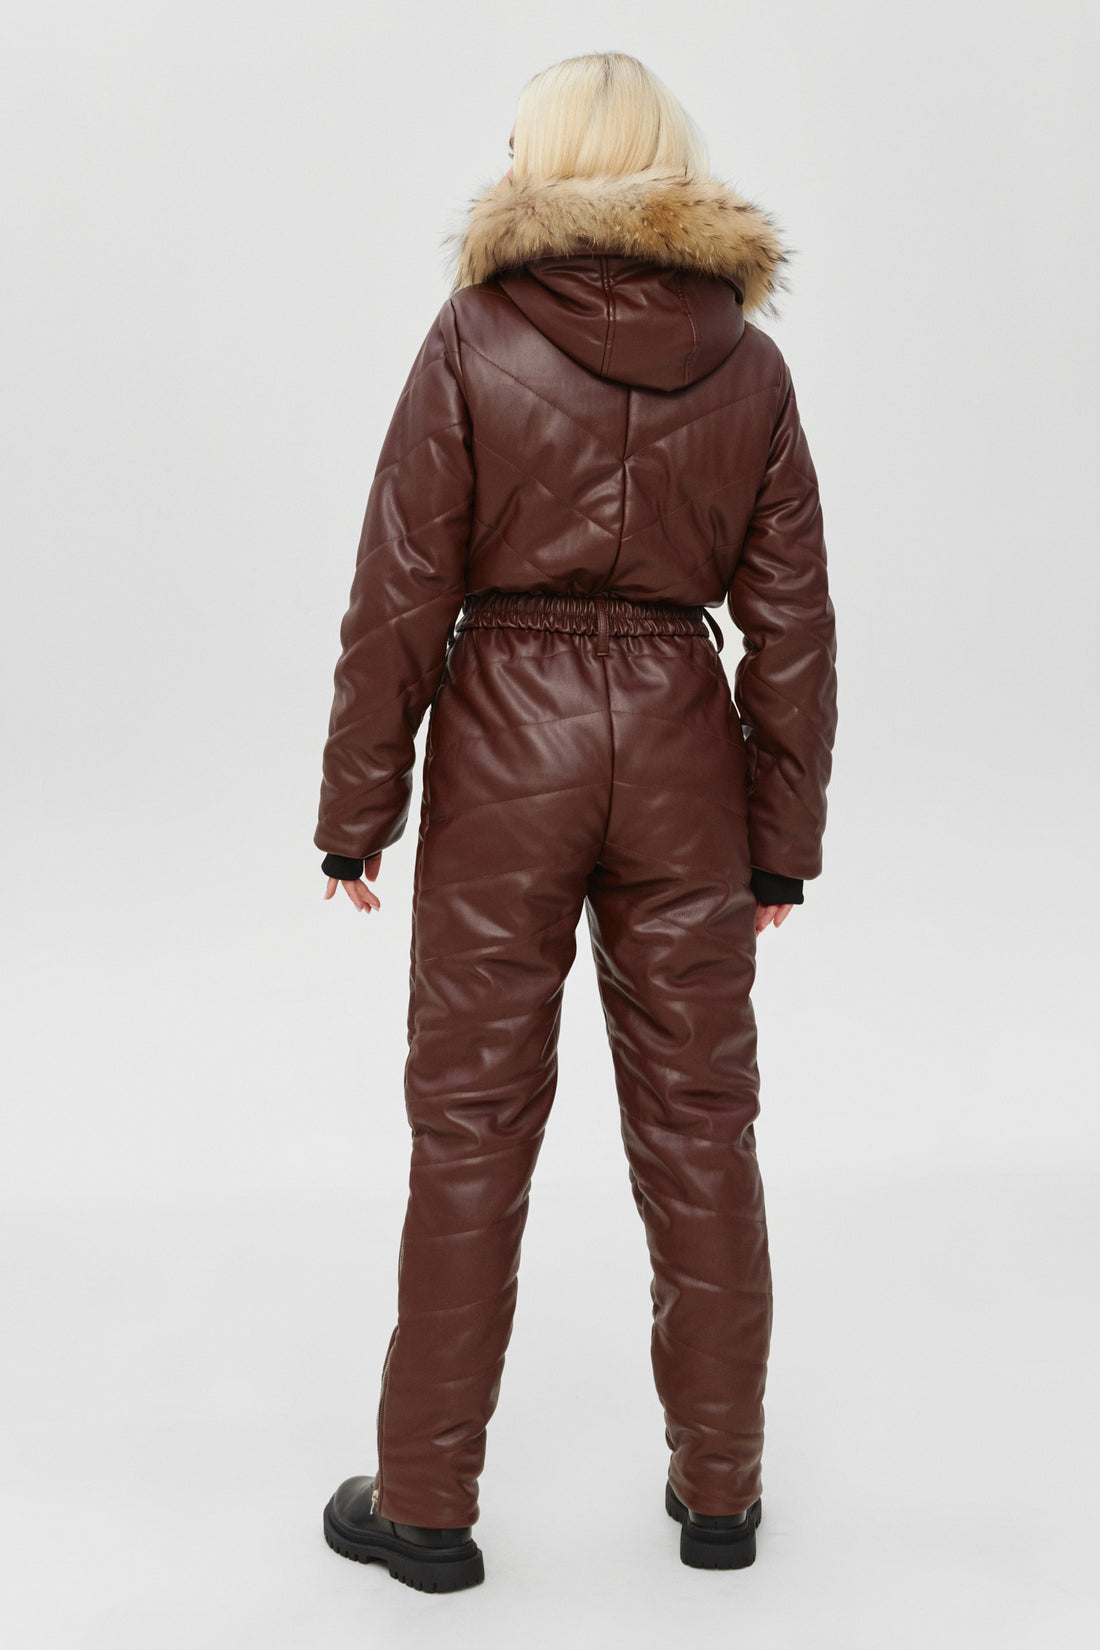 Warm ski pants and jacket one piece suit ELIAS - BROWN funny skisuit women's